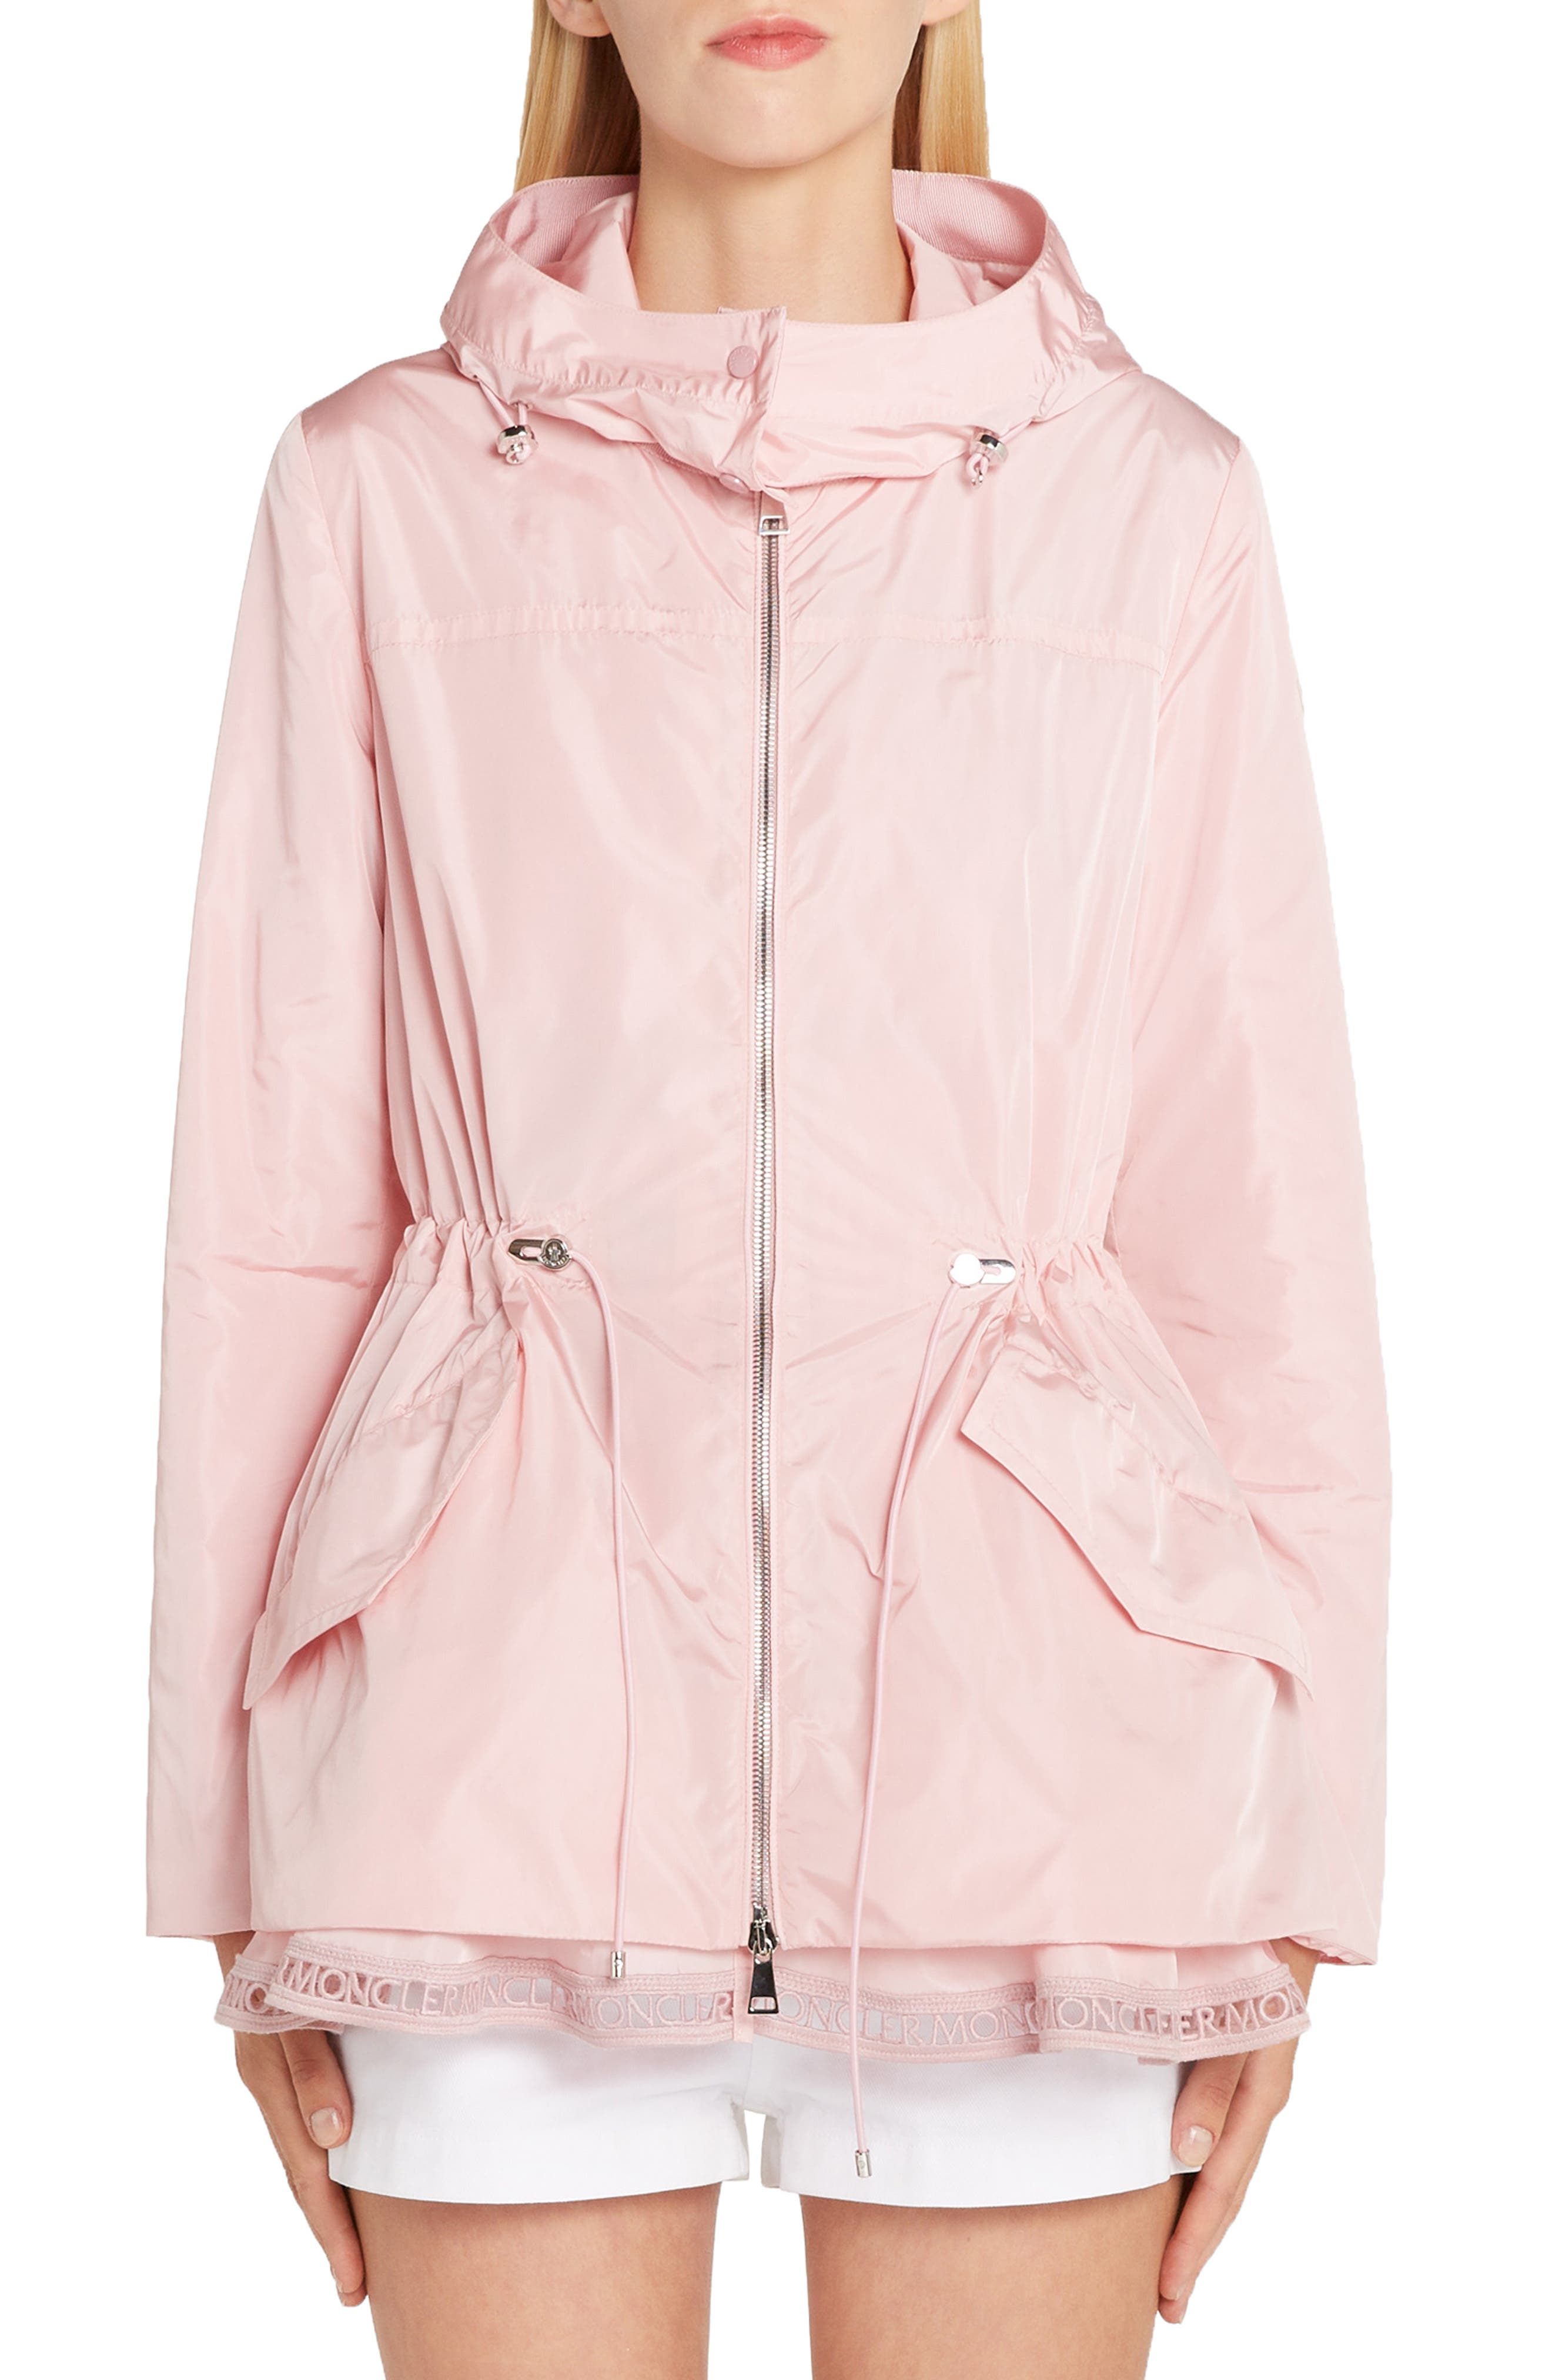 moncler women's rain jackets